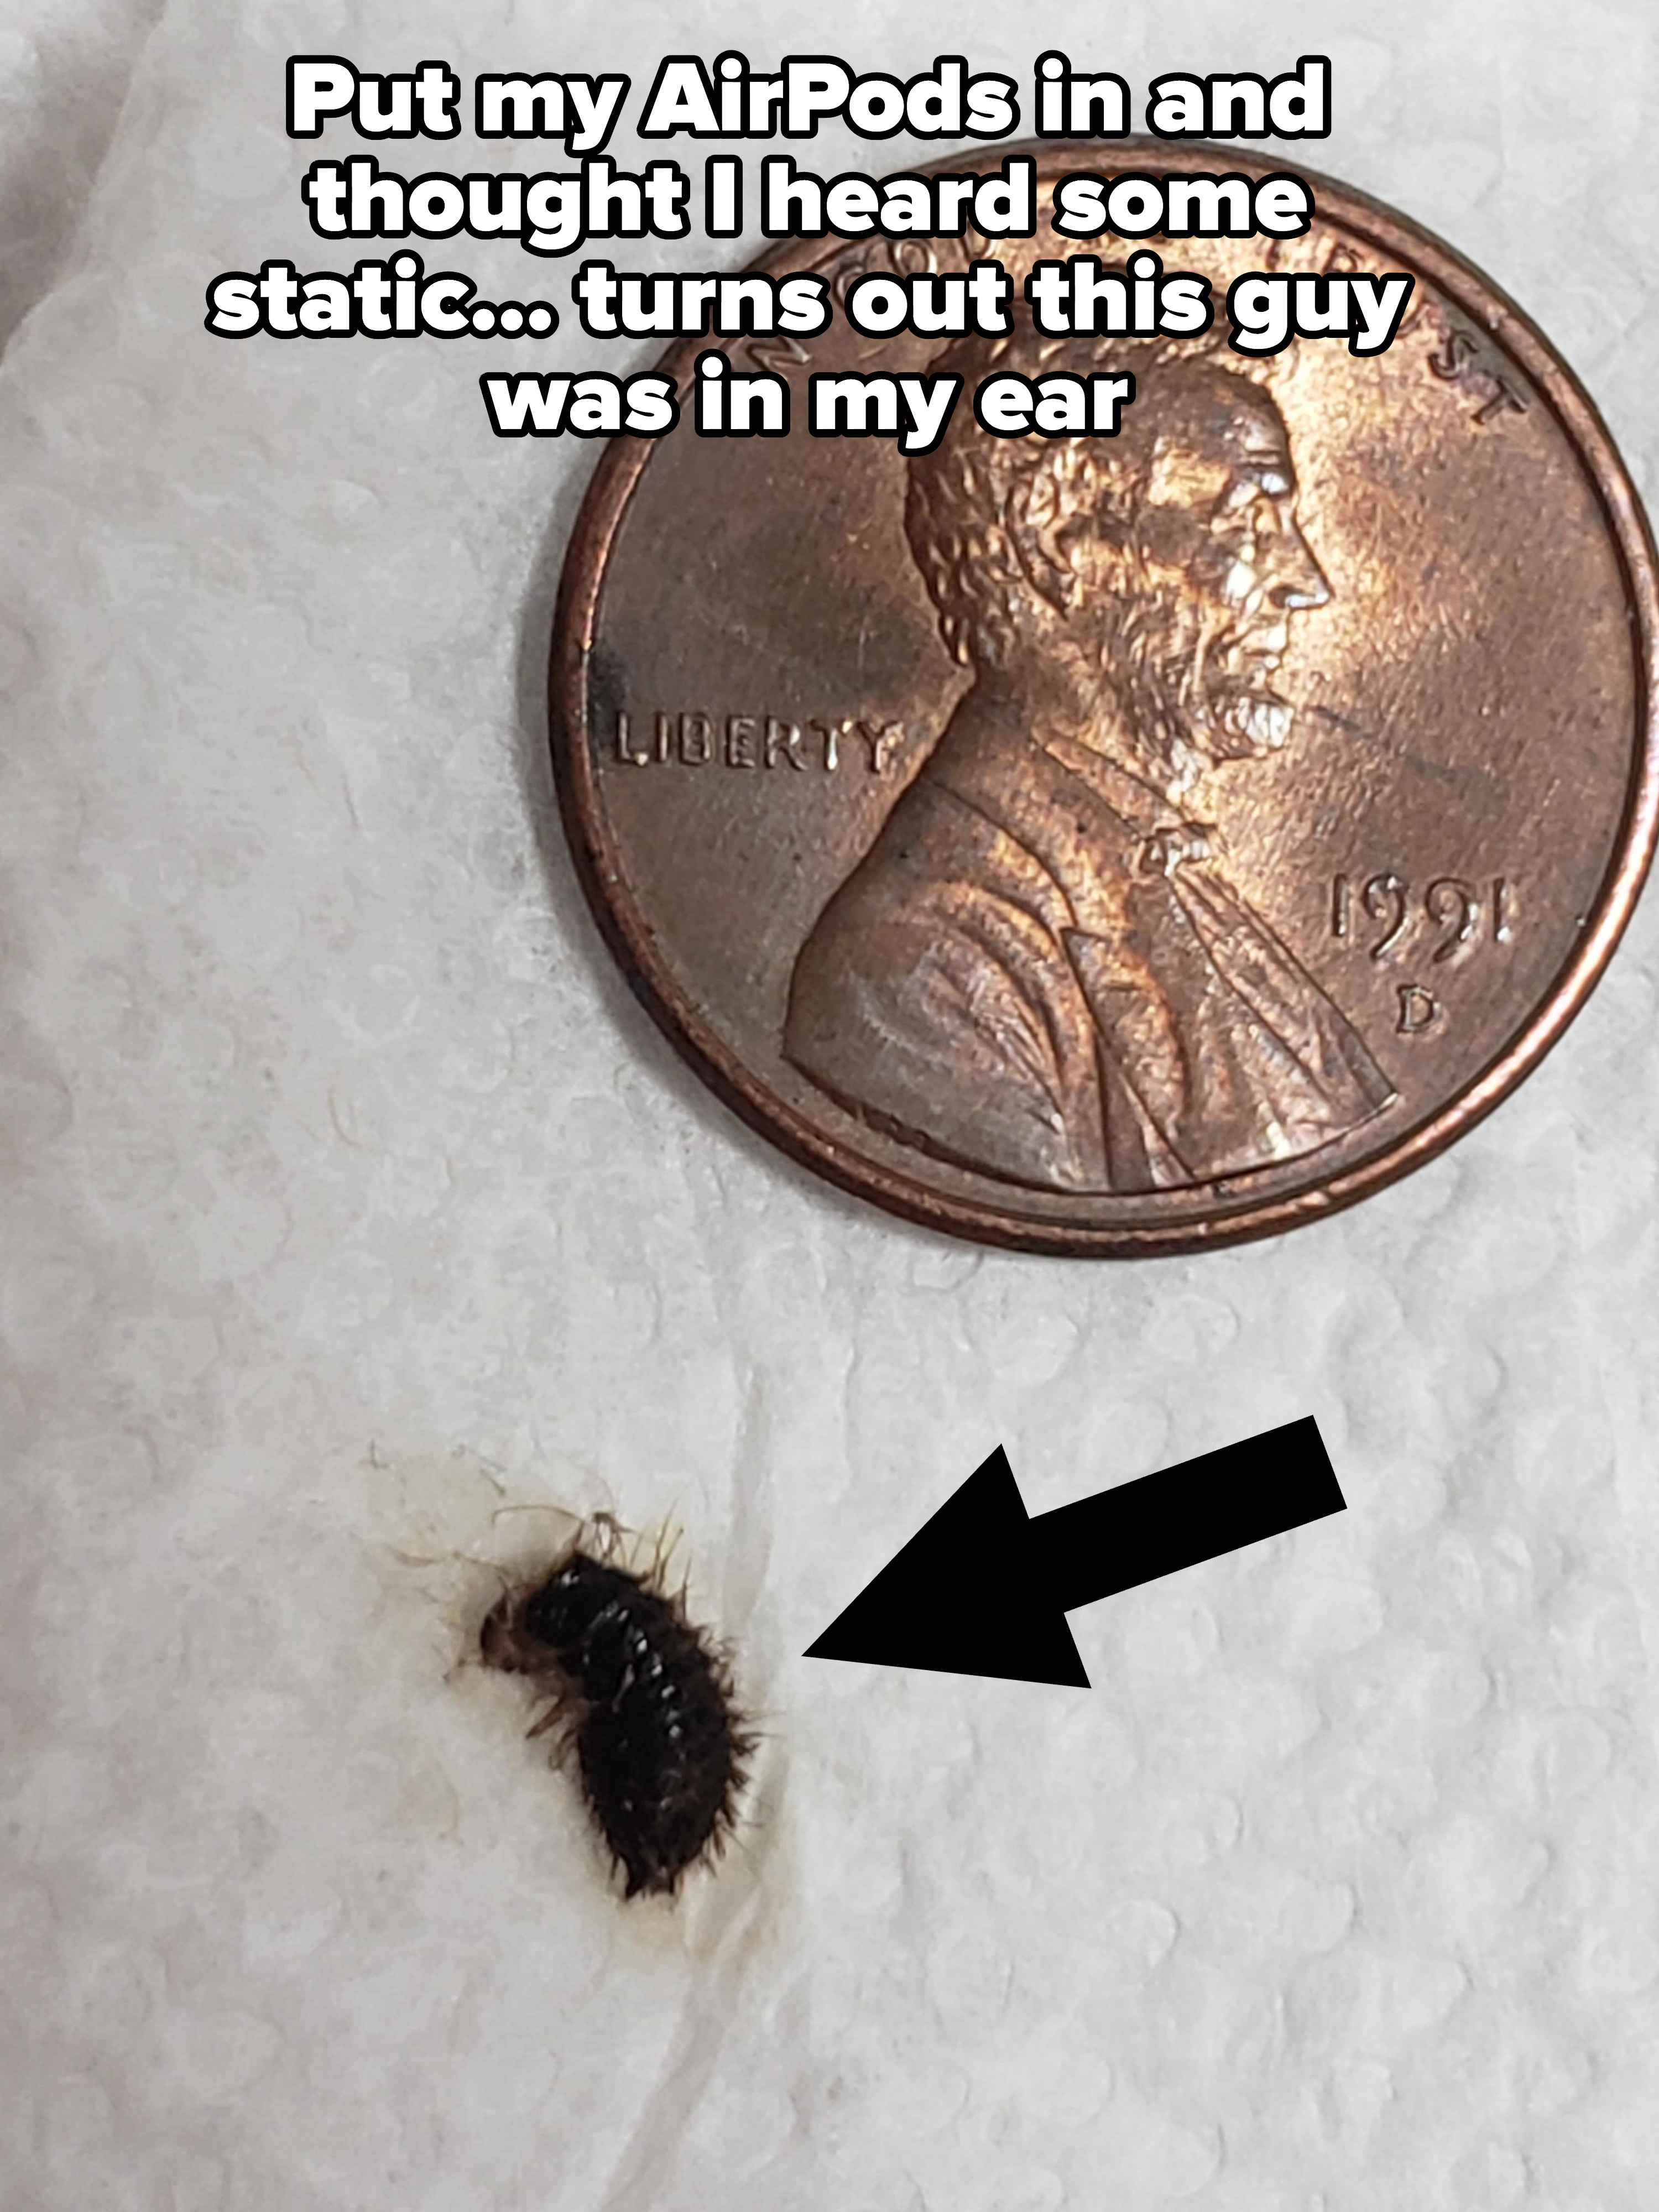 A smallish, furry bug found inside their AirPods